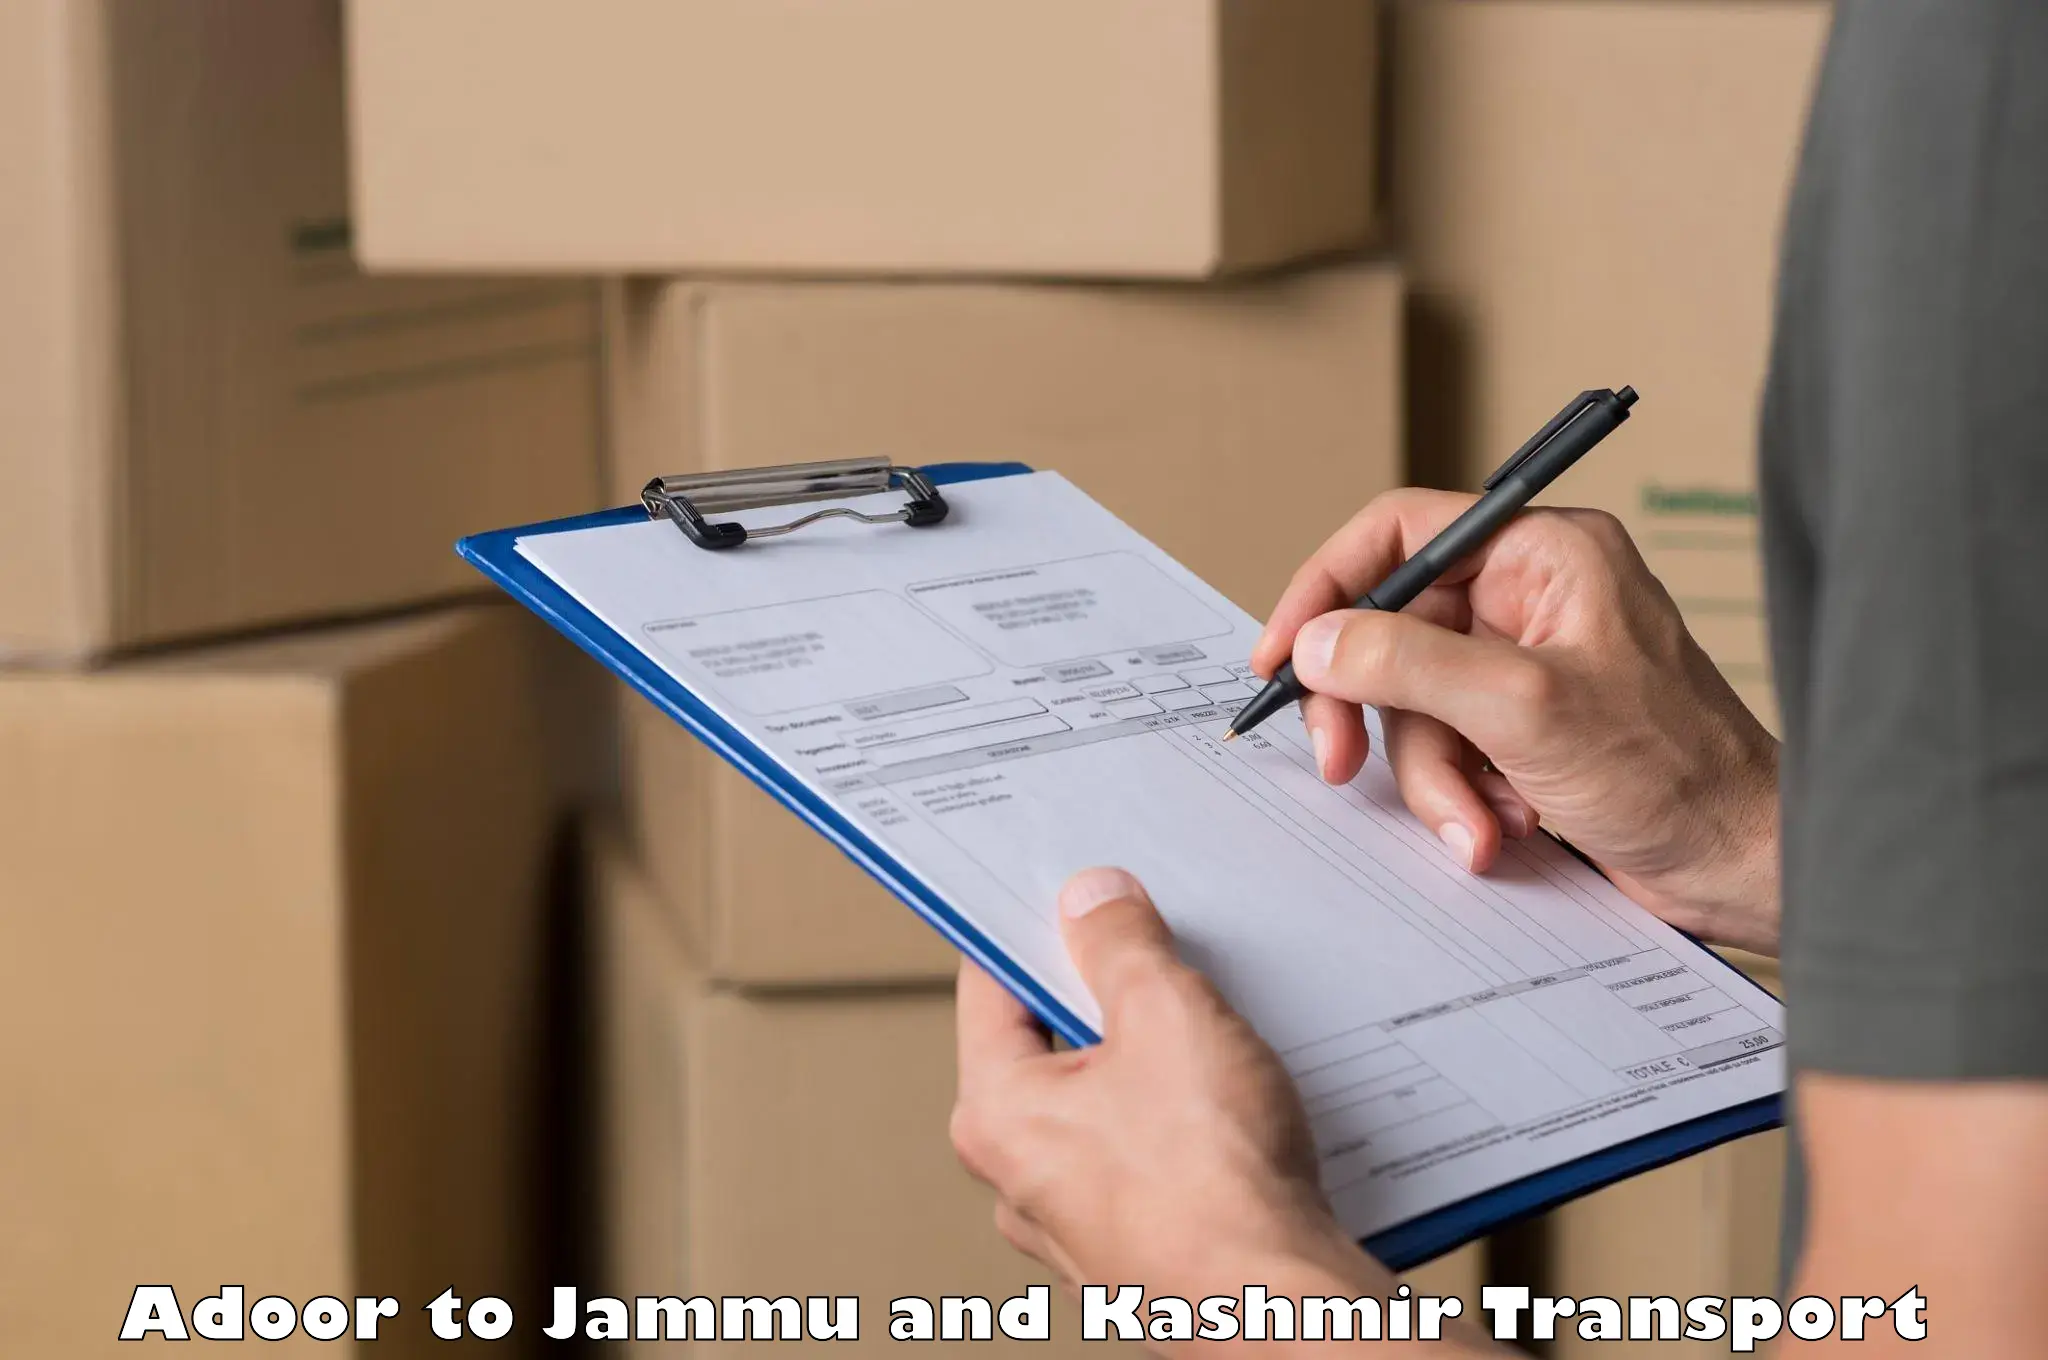 Delivery service Adoor to Srinagar Kashmir